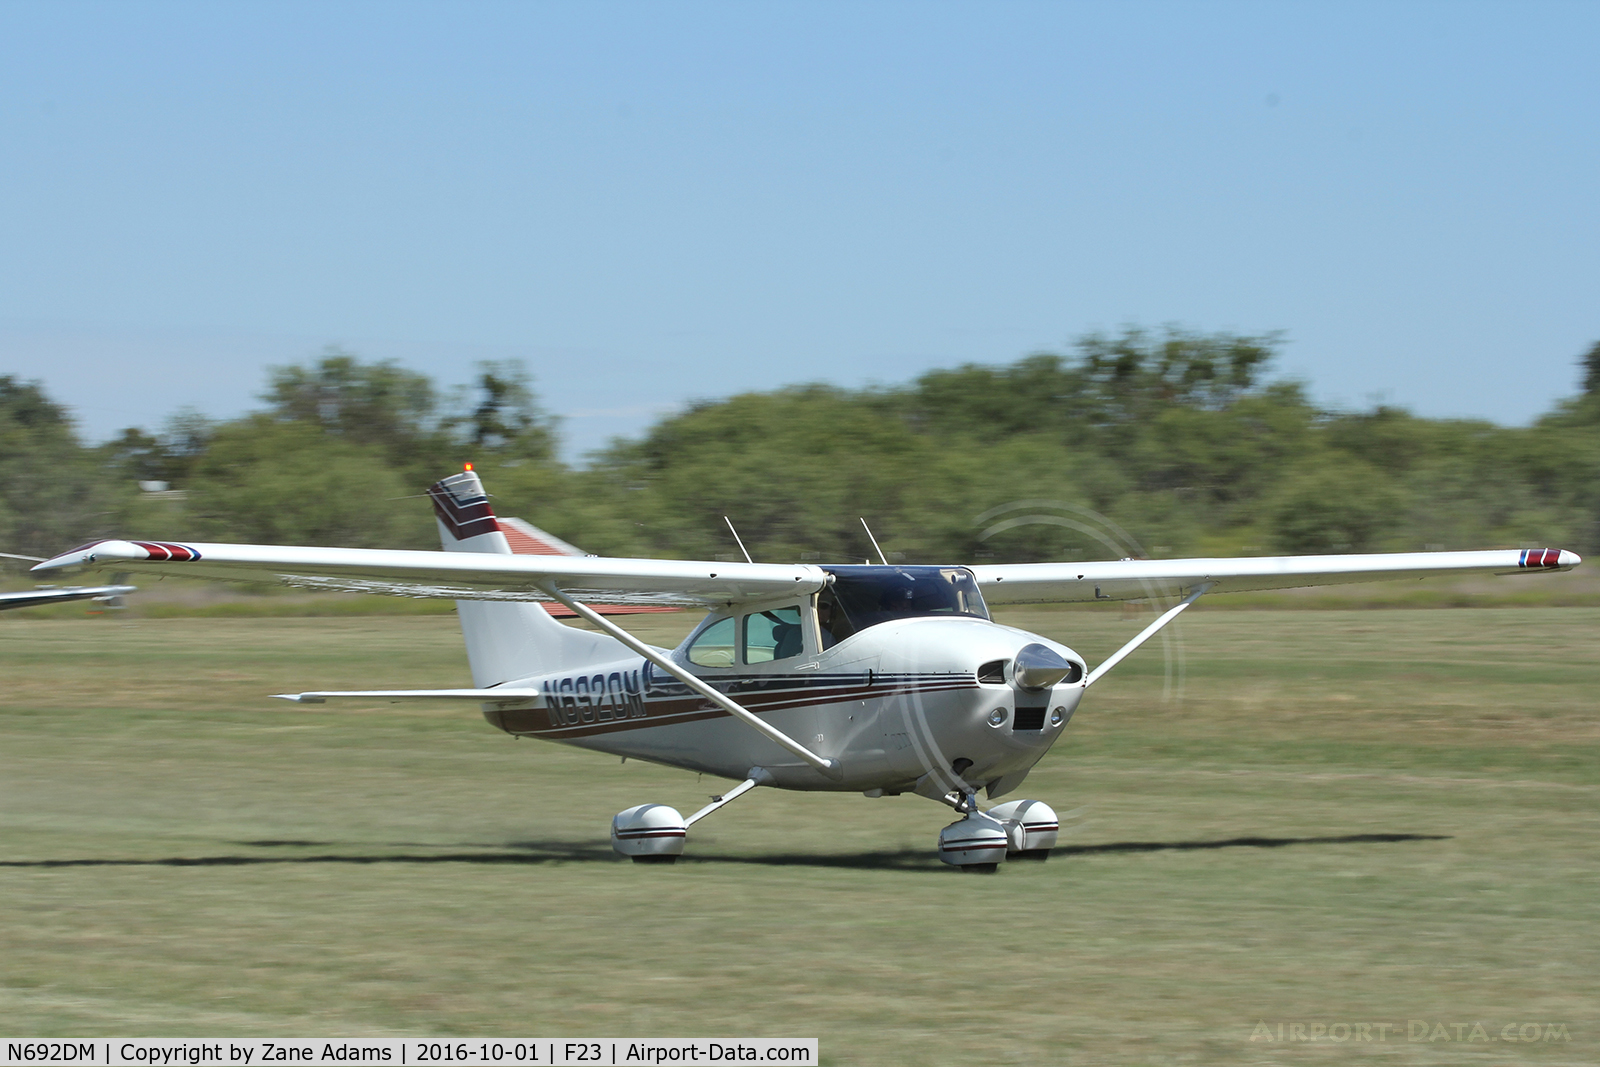 N692DM, 1990 Avid Flyer C/N 556-12-9790, At the 2016 Ranger, Texas Fly-in